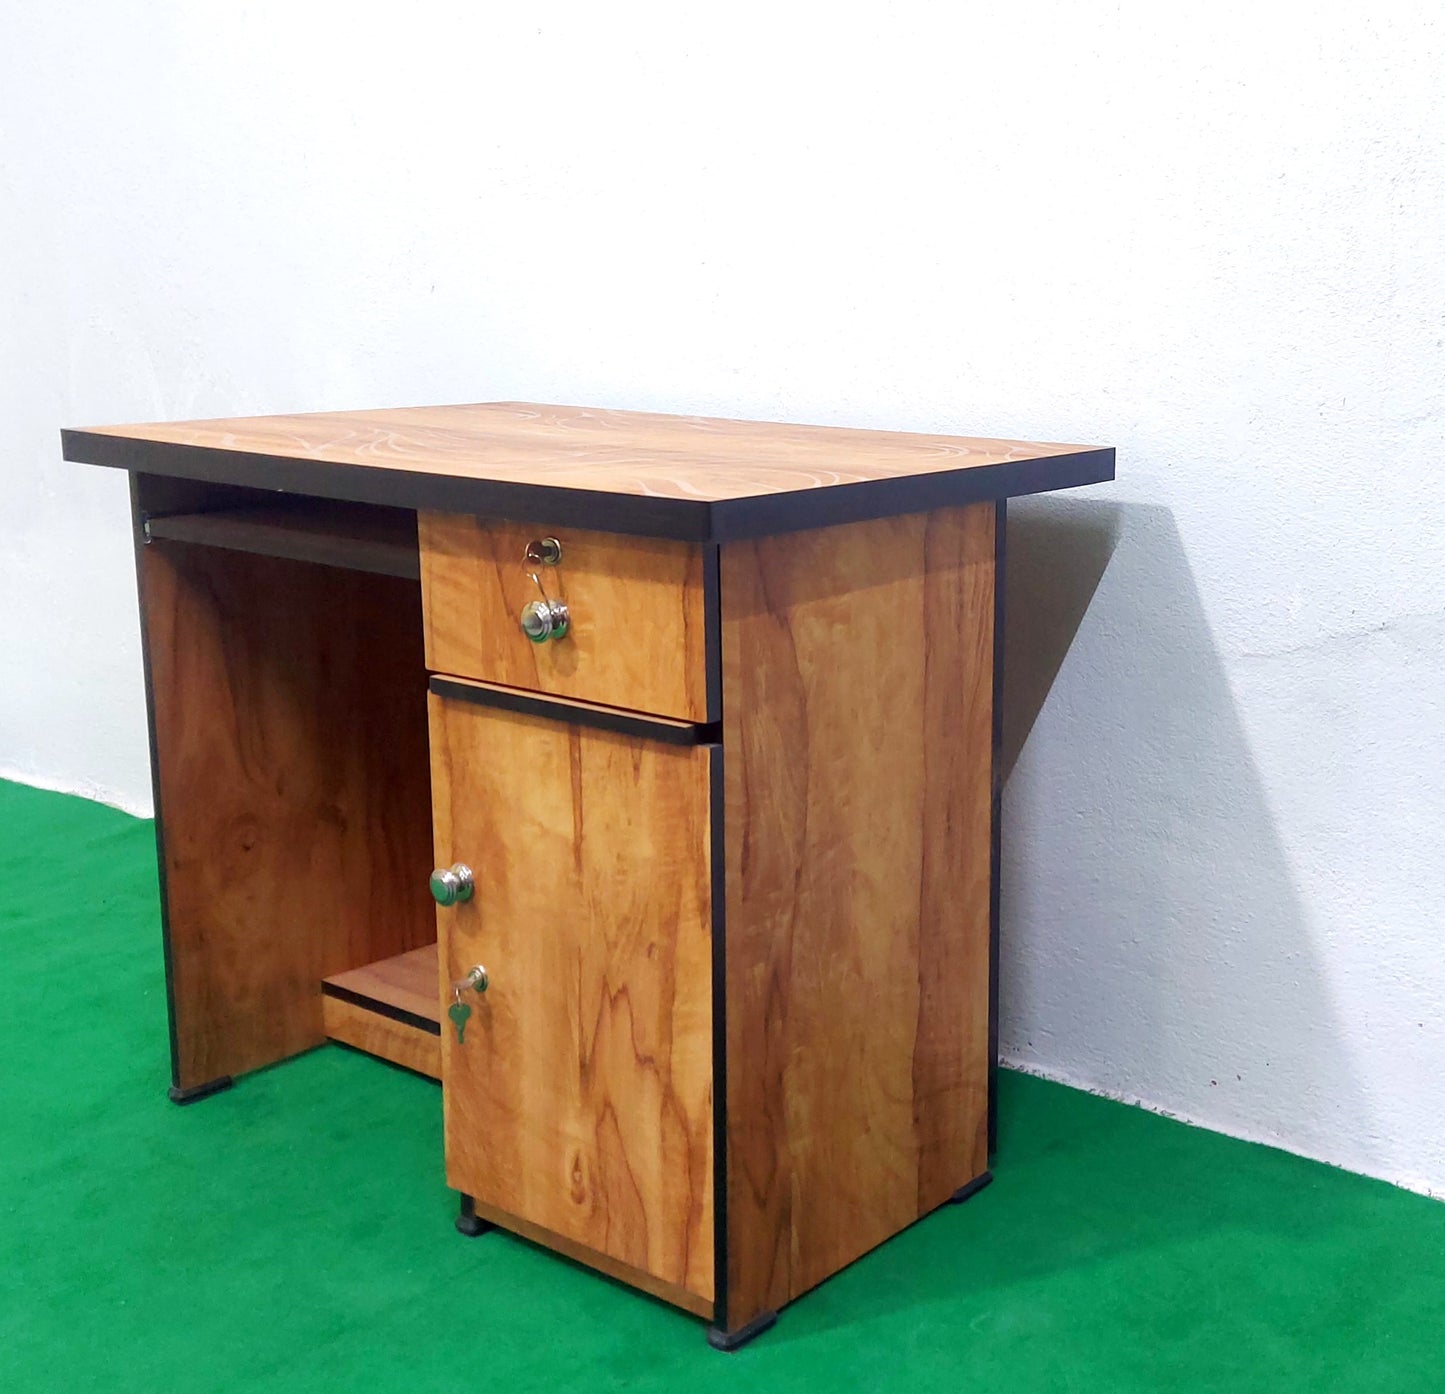 Bowzar Wooden Office Table 3X2 Feet Wooden Pattern